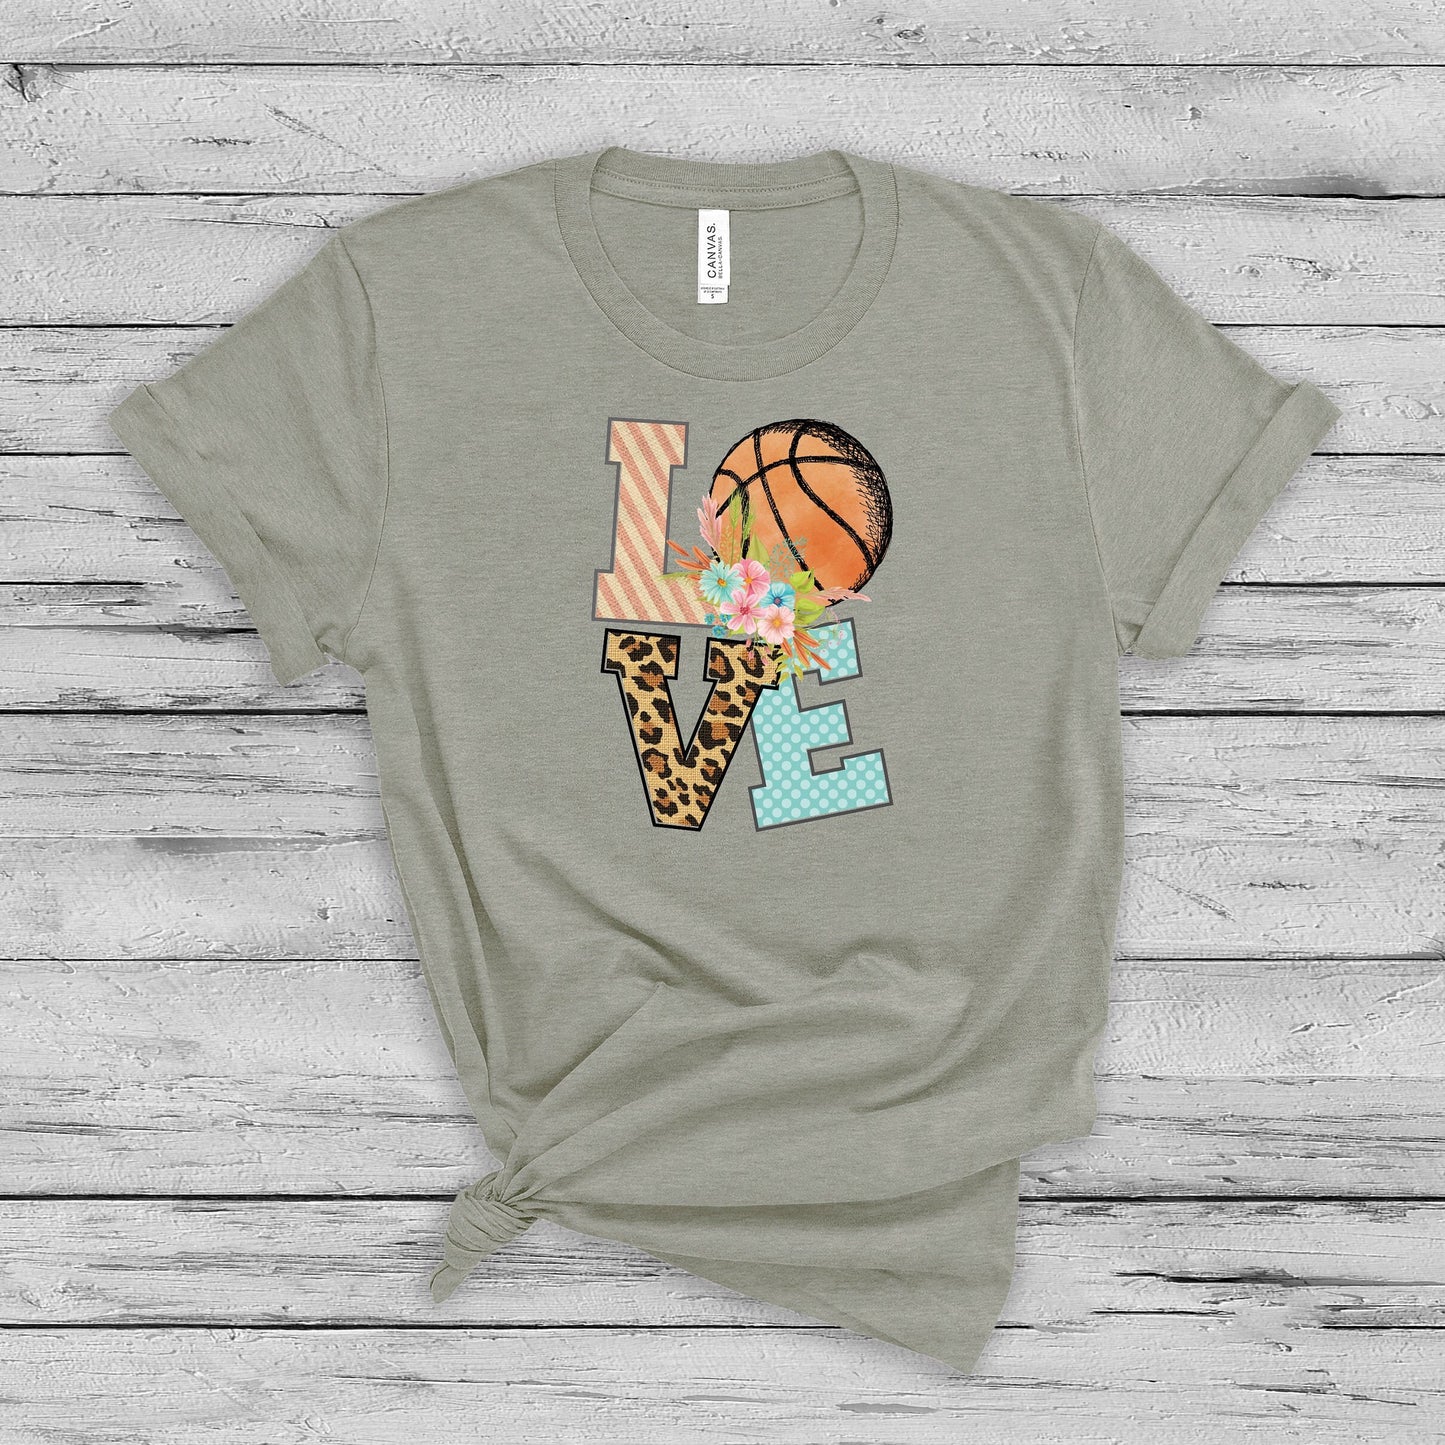 Love Basketball T-Shirt